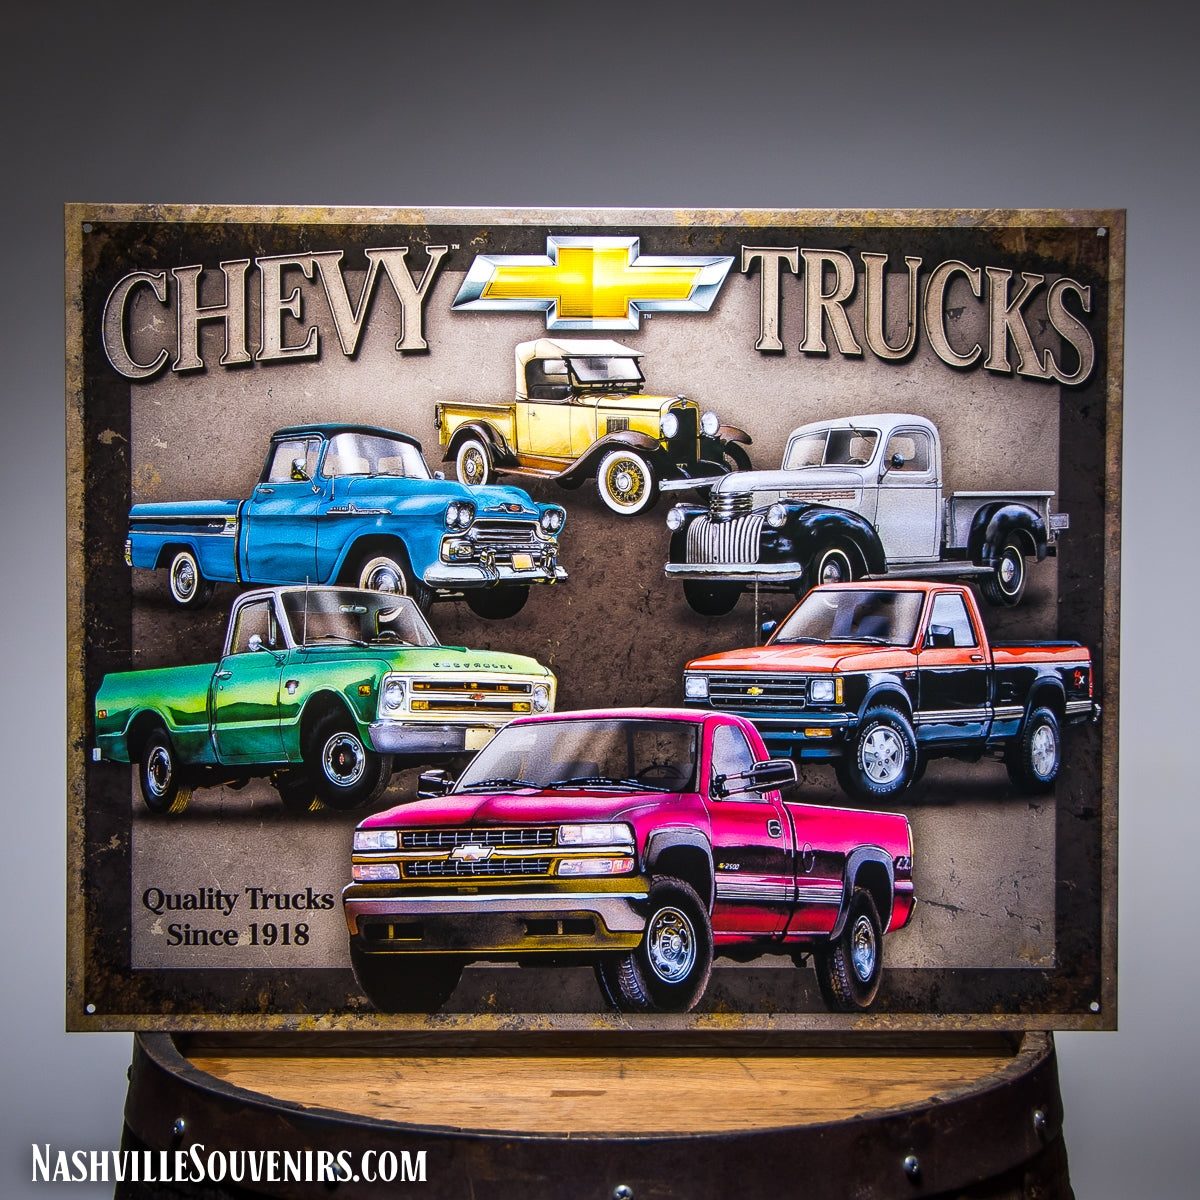 Chevy Trucks Quality Trucks since 1918 Tin Sign